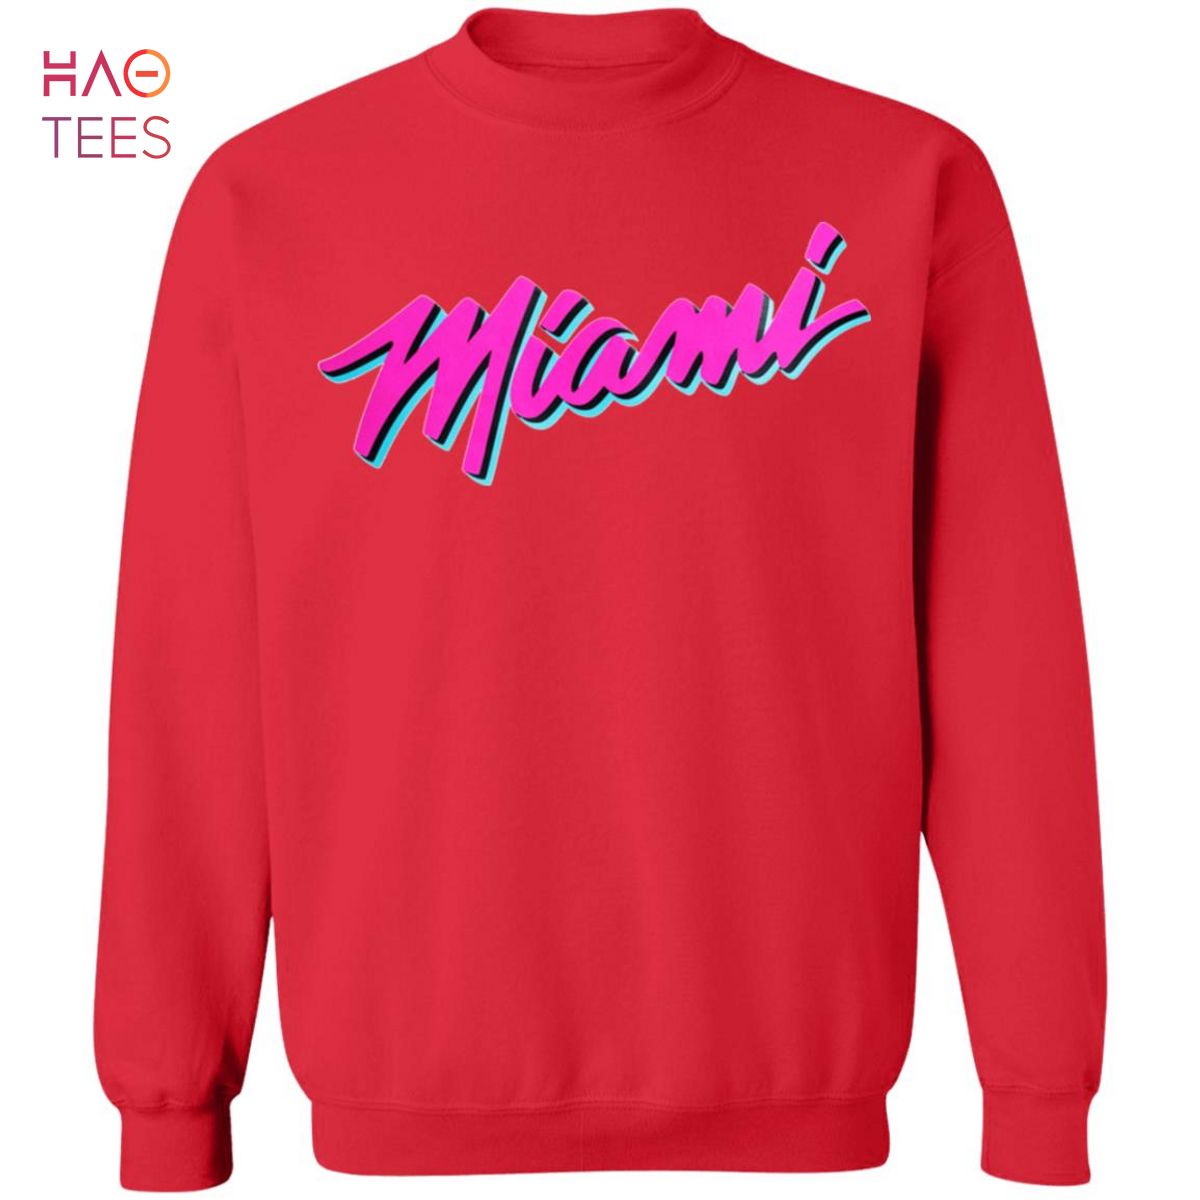 Hottertees Vintage Inspired Miami Heat Sweatshirt